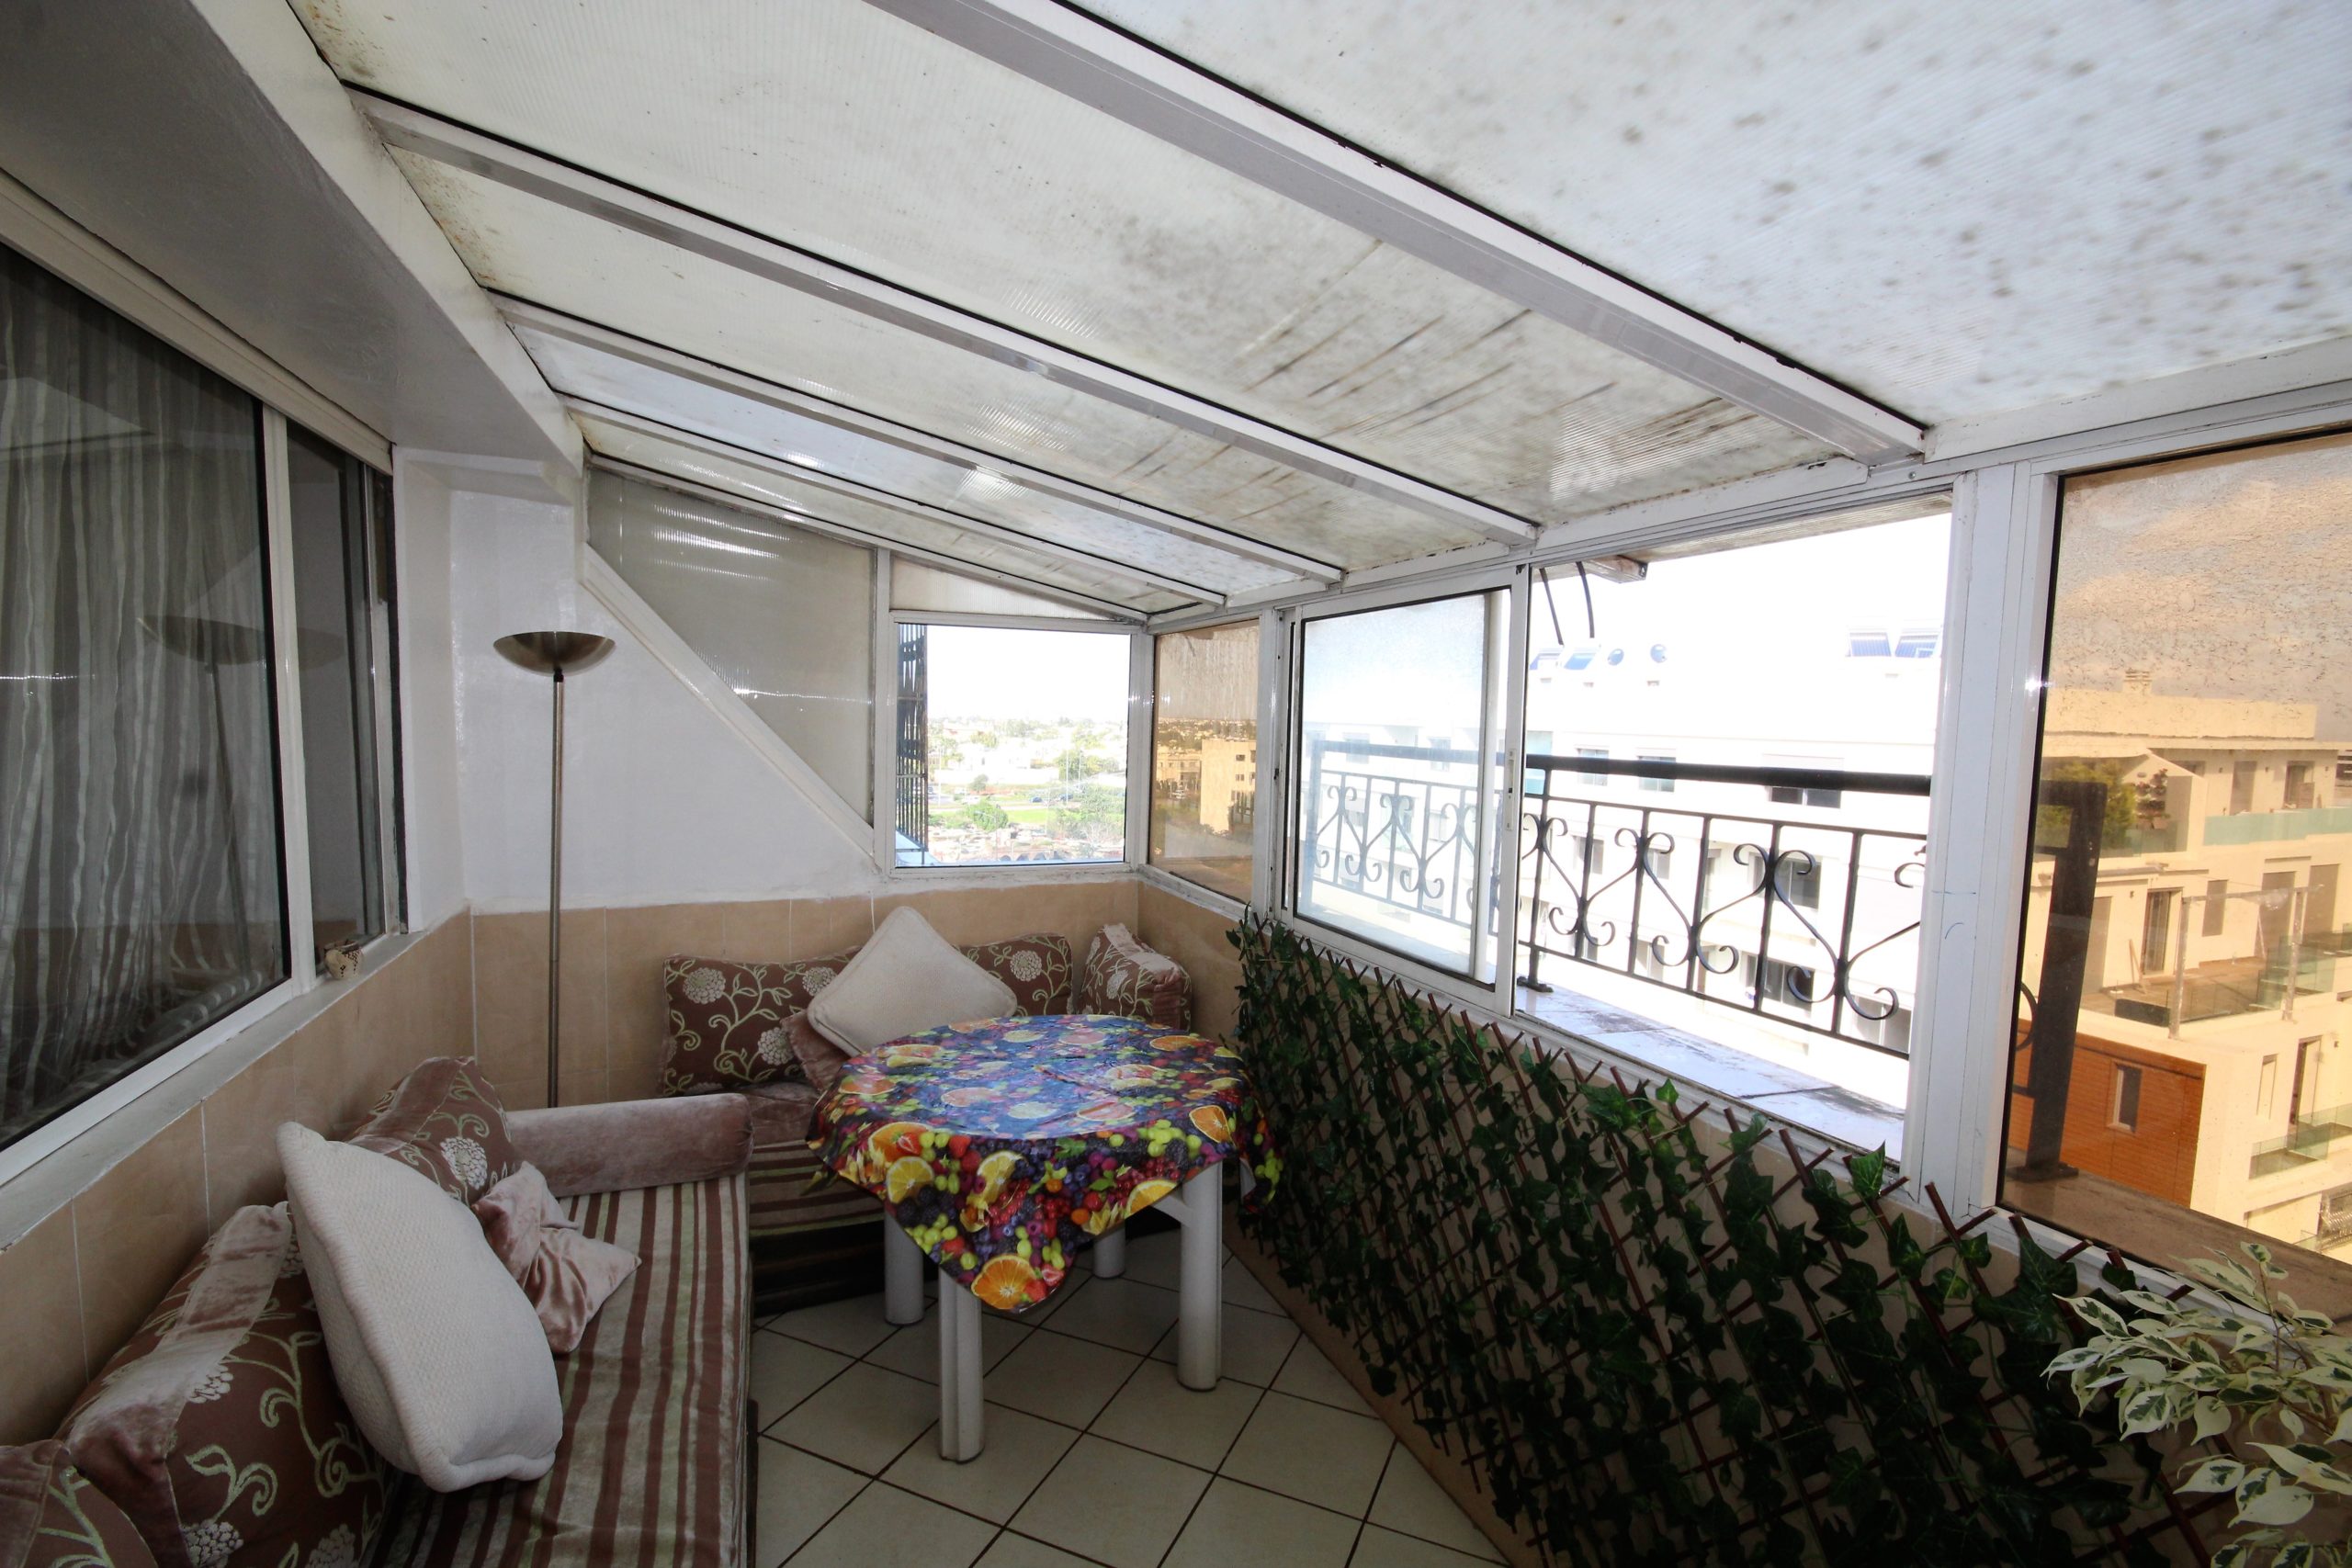 Maroc, Casablanca, Californie, vend 5 pièces avec grande terrasse bon prix